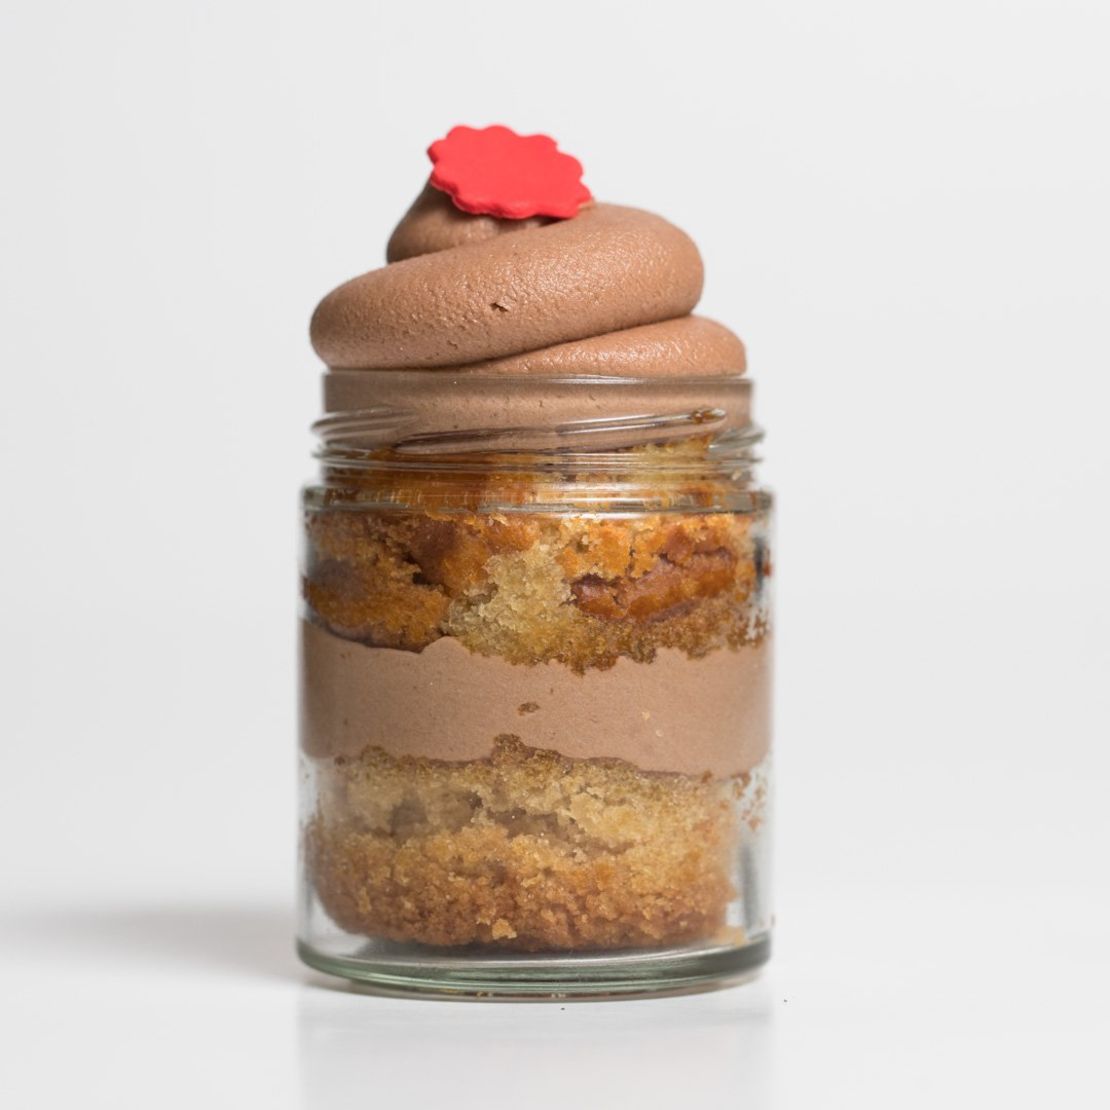 A vegan cupcake jar from Dreamy Creations